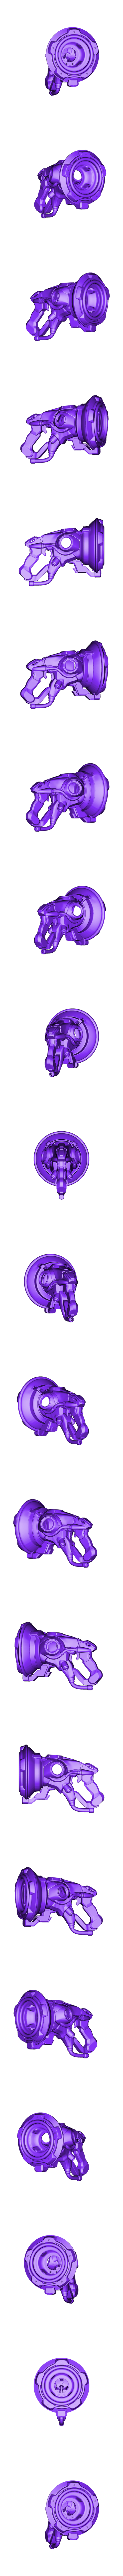 Lucio_all.stl Download free STL file Overwatch Lucio Blaster • 3D print design, Adafruit